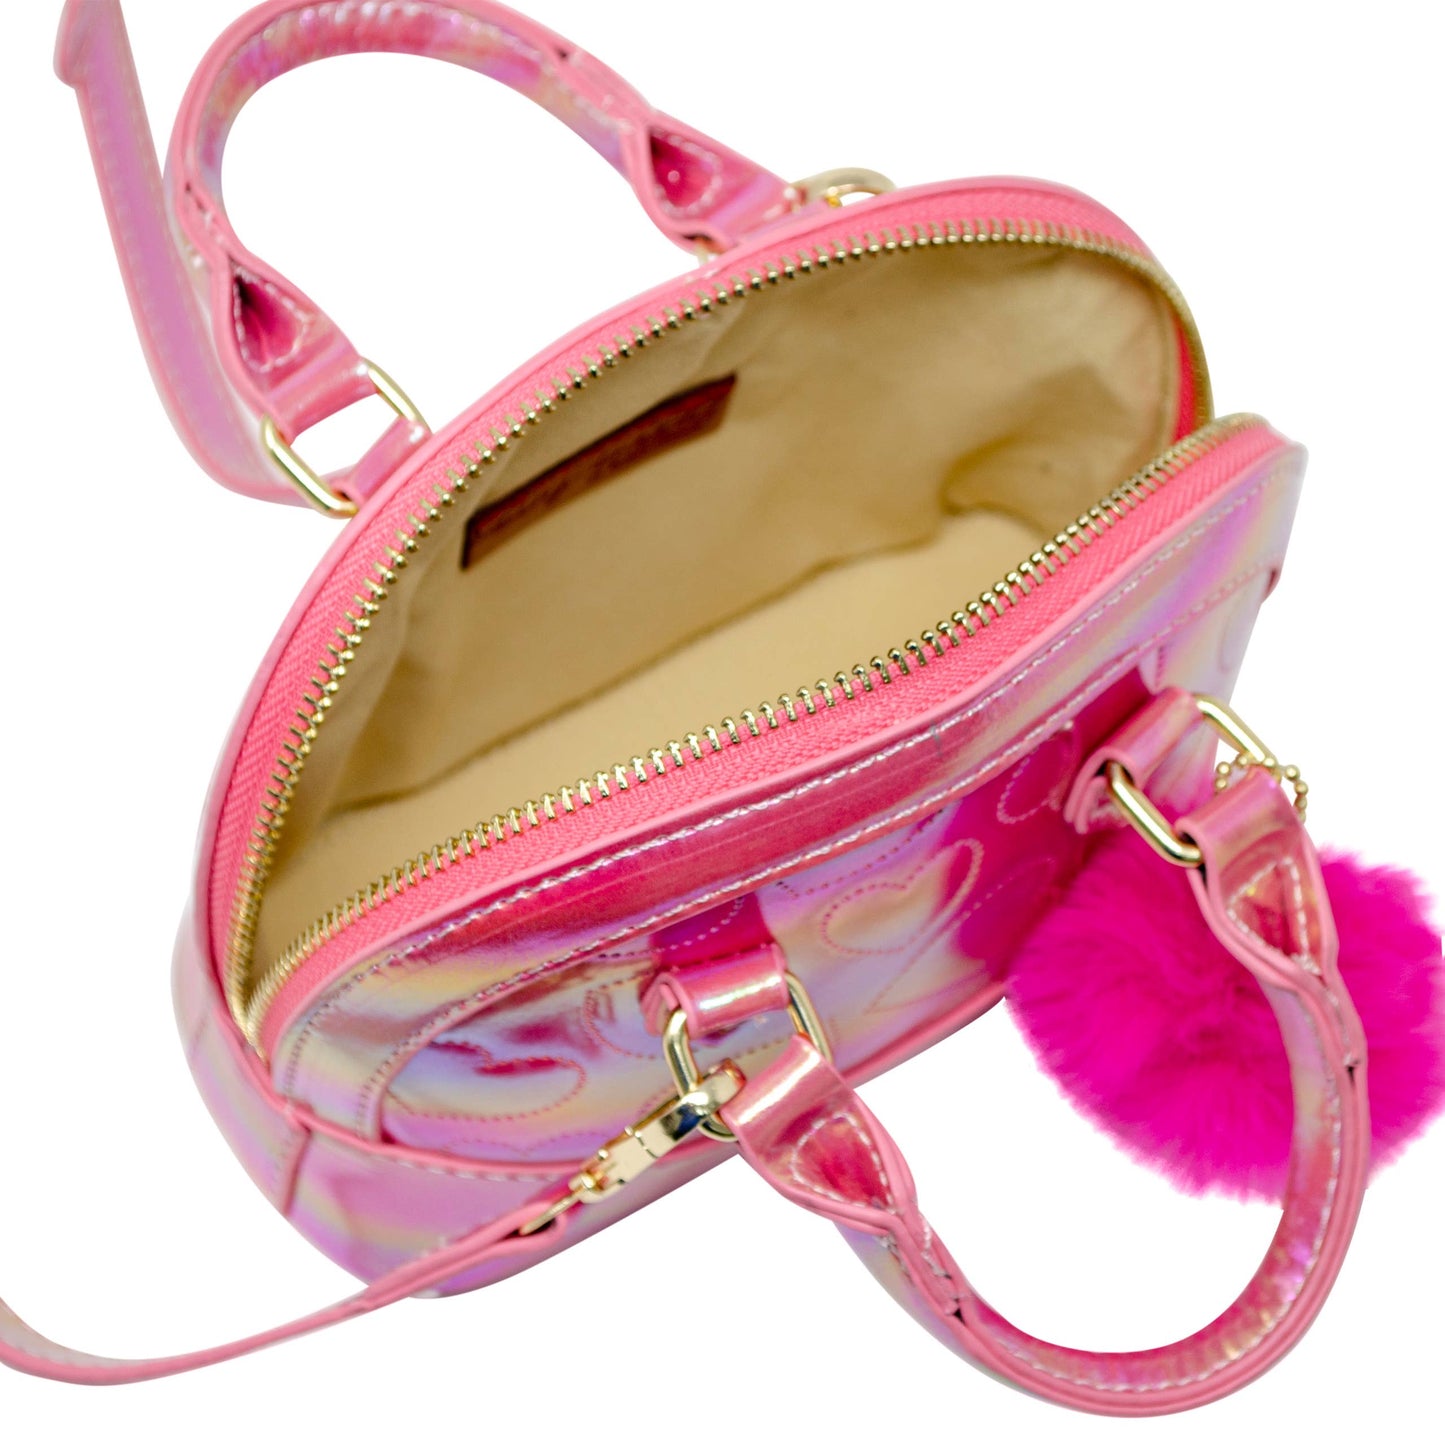 Shiny Dotted Heart Moon Handbag: Hot Pink